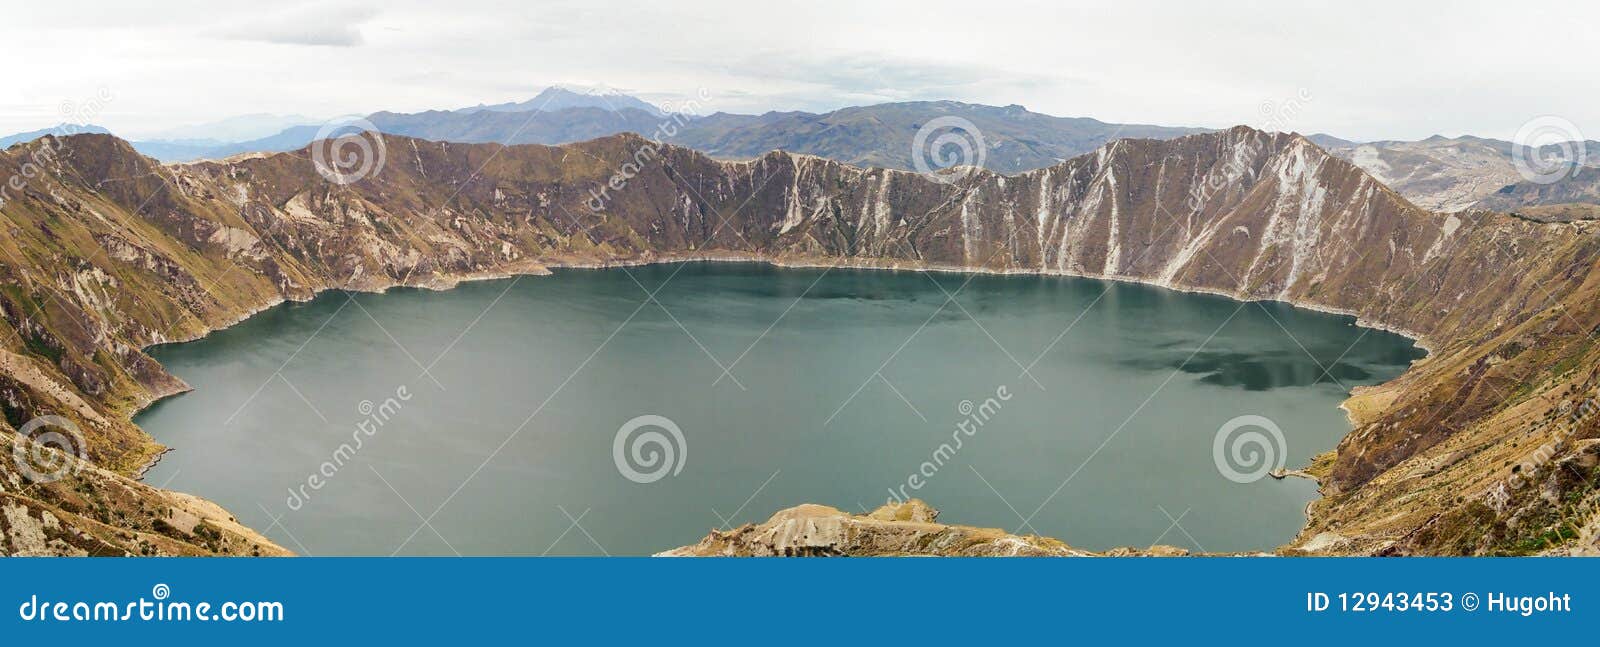 quilotoa lake in volcano crater, ecuador